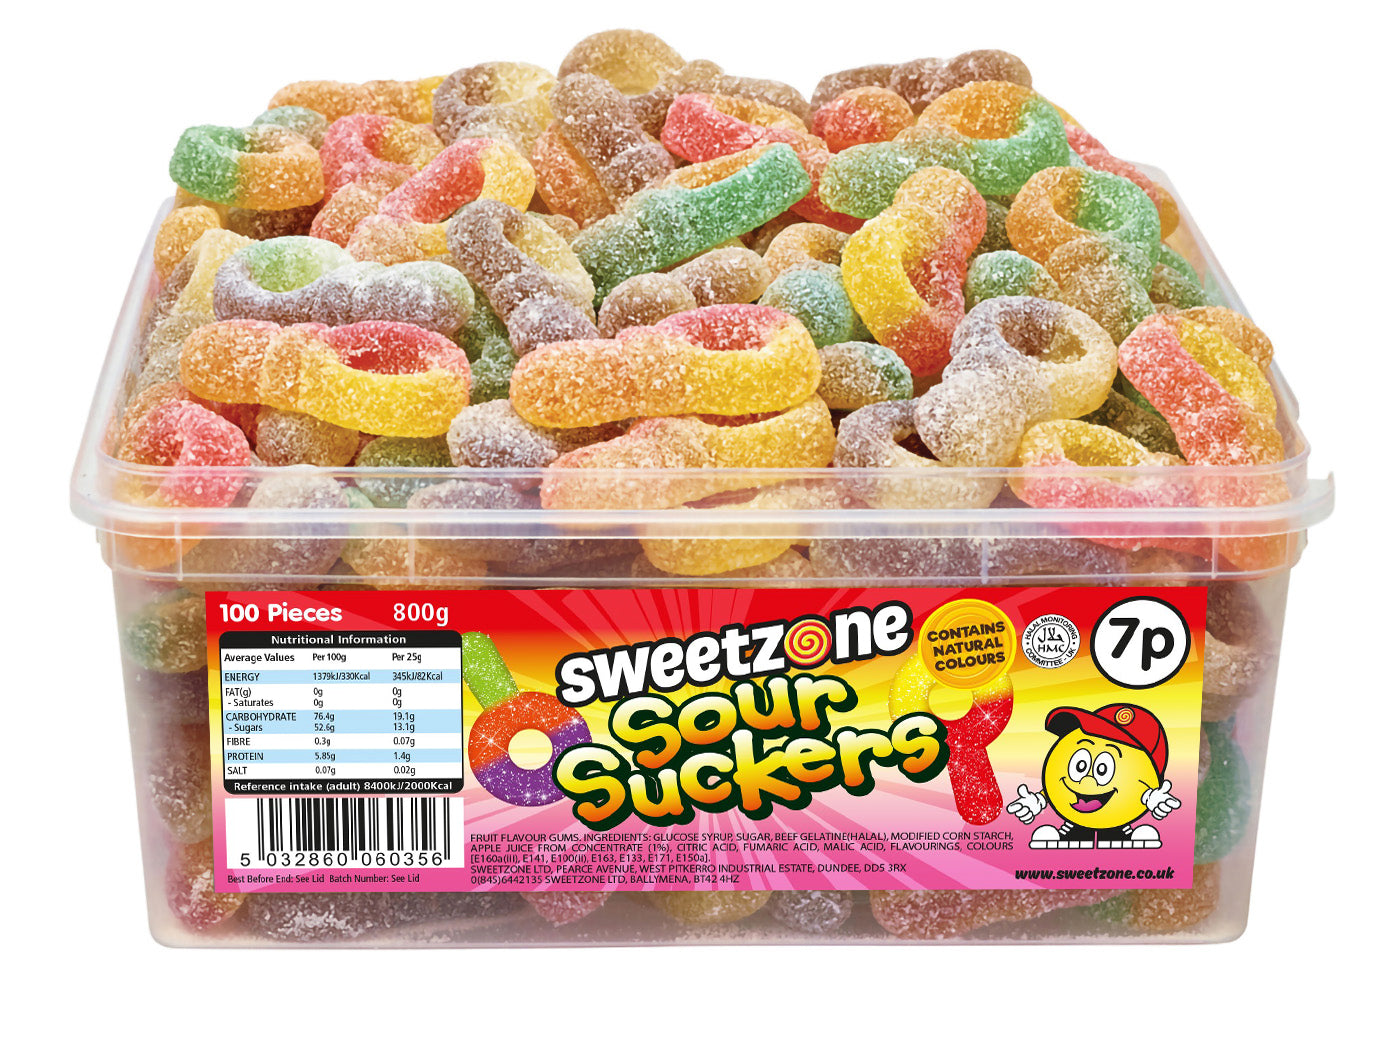 Sweetzone Sour Suckers 7p Tub 800g